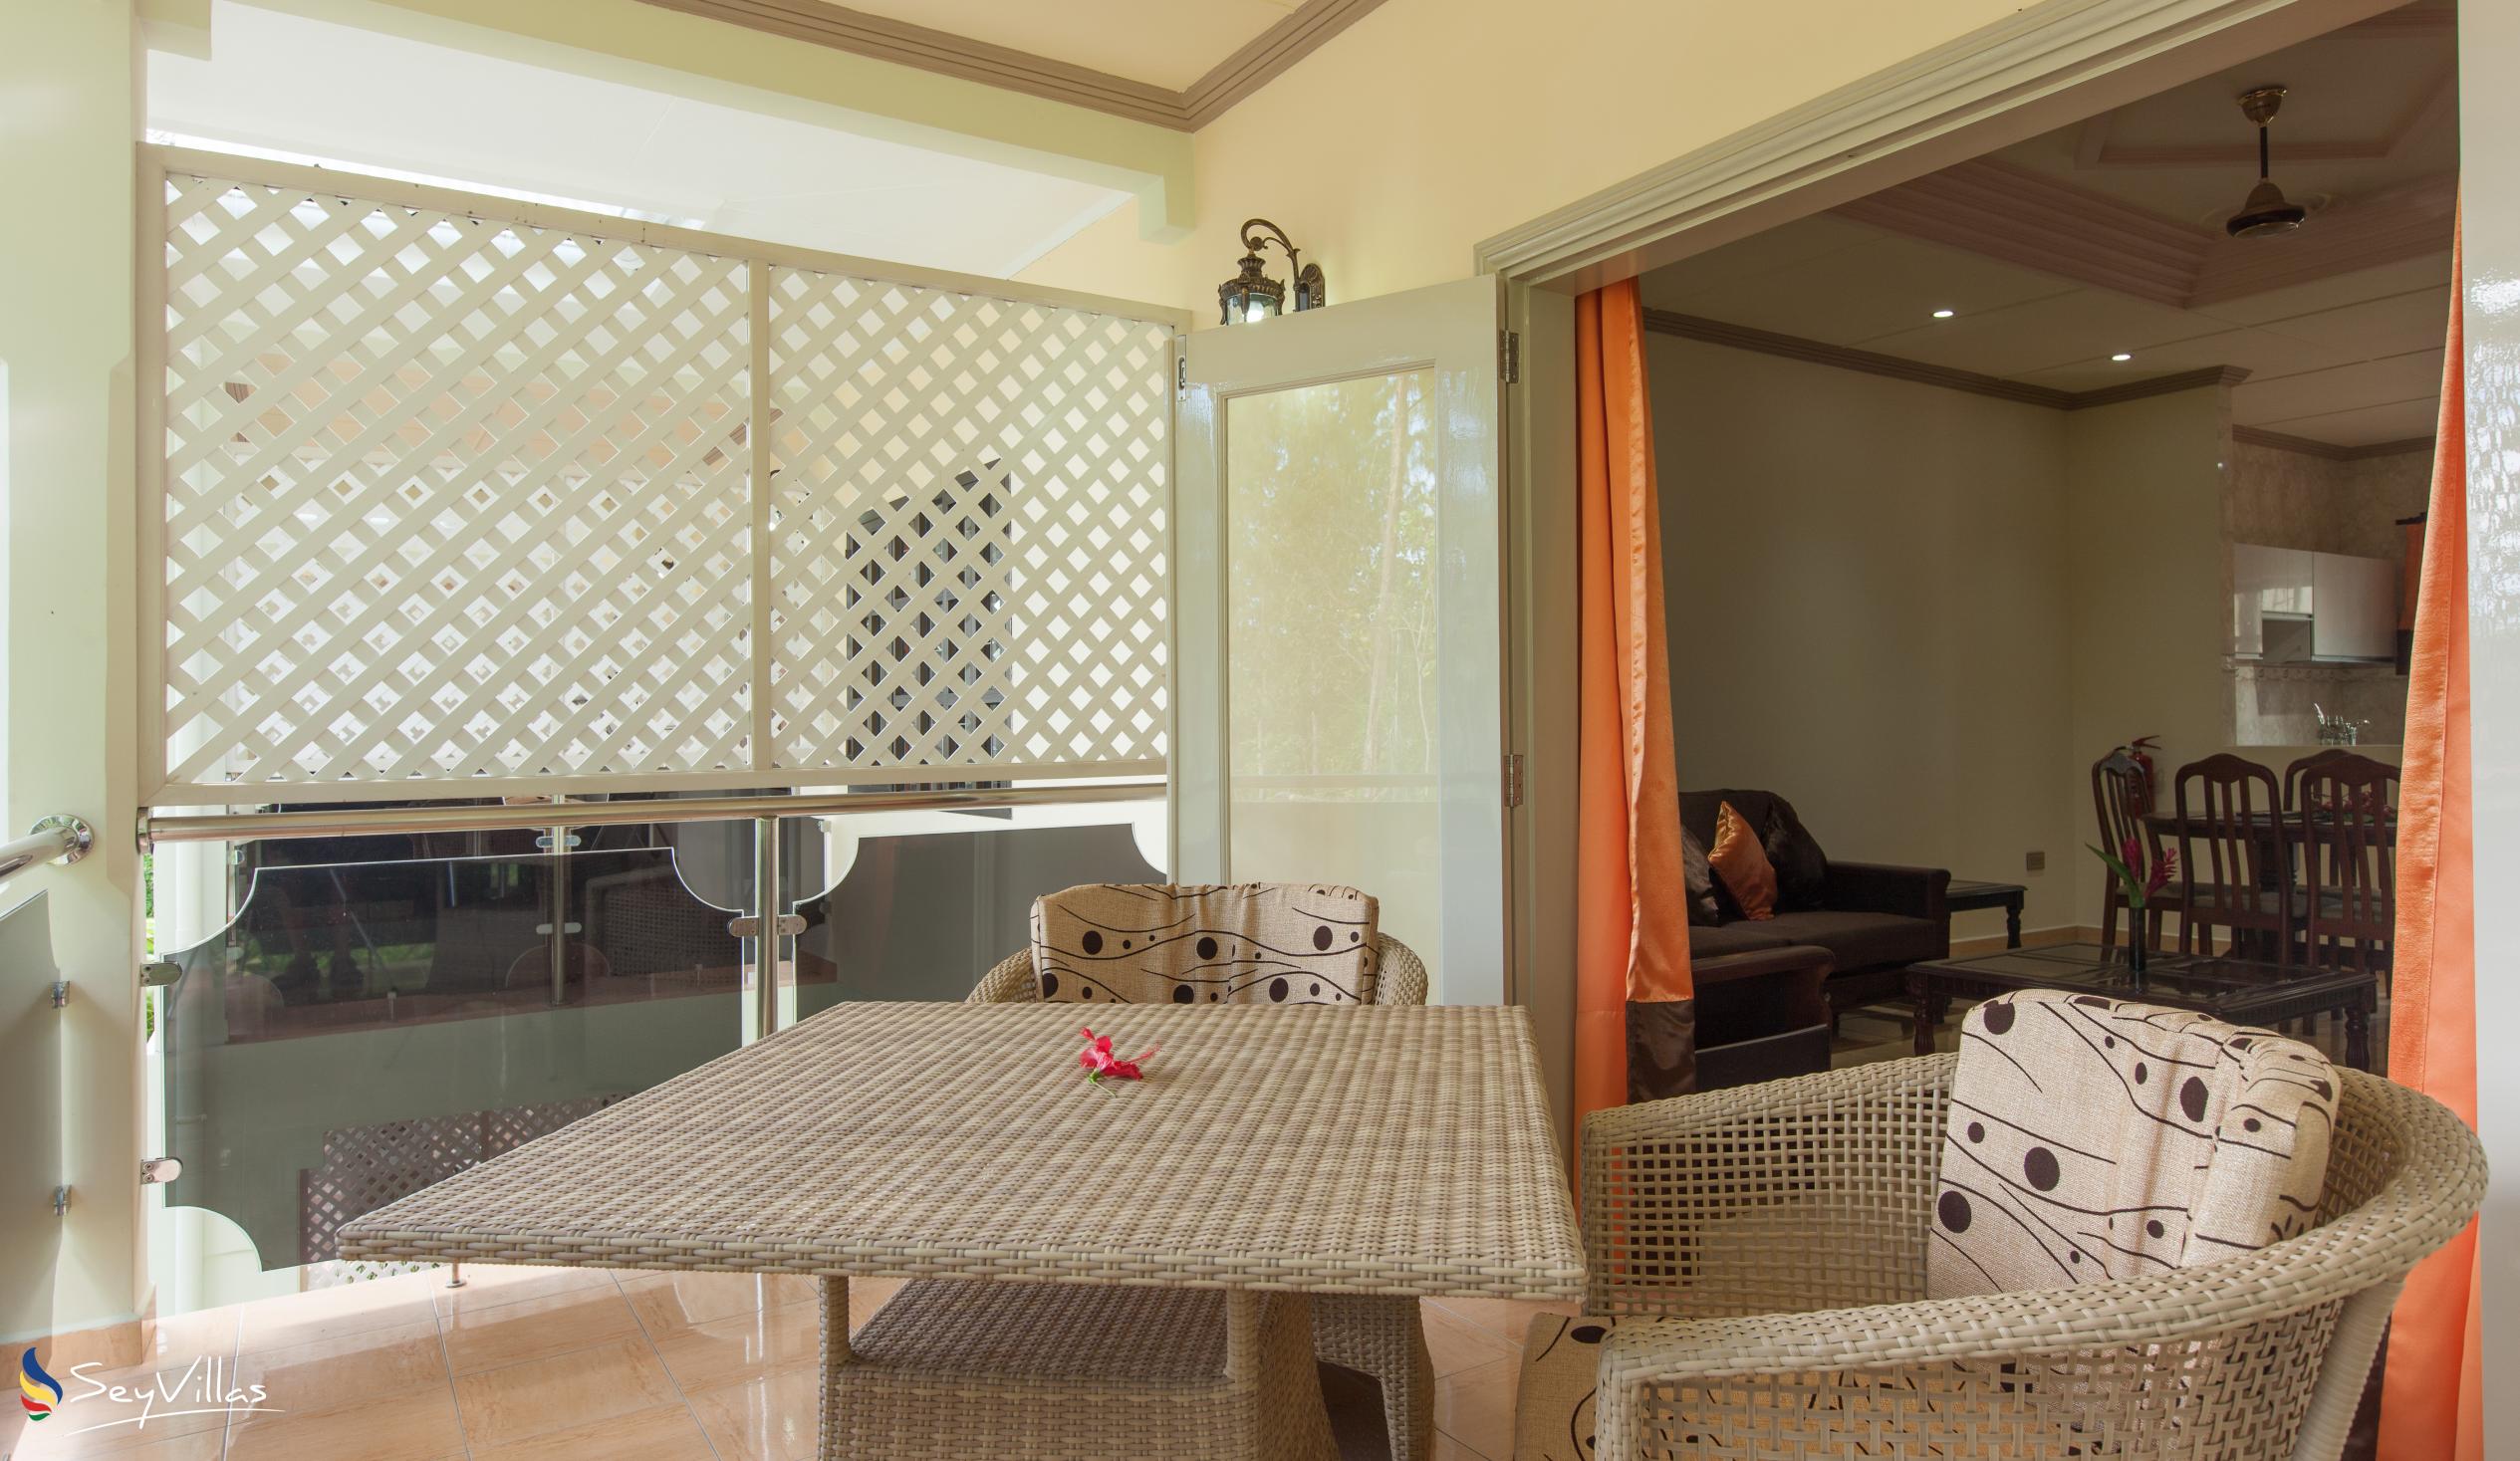 Foto 92: Chez Bea Villa - Appartement 1 chambre - Praslin (Seychelles)